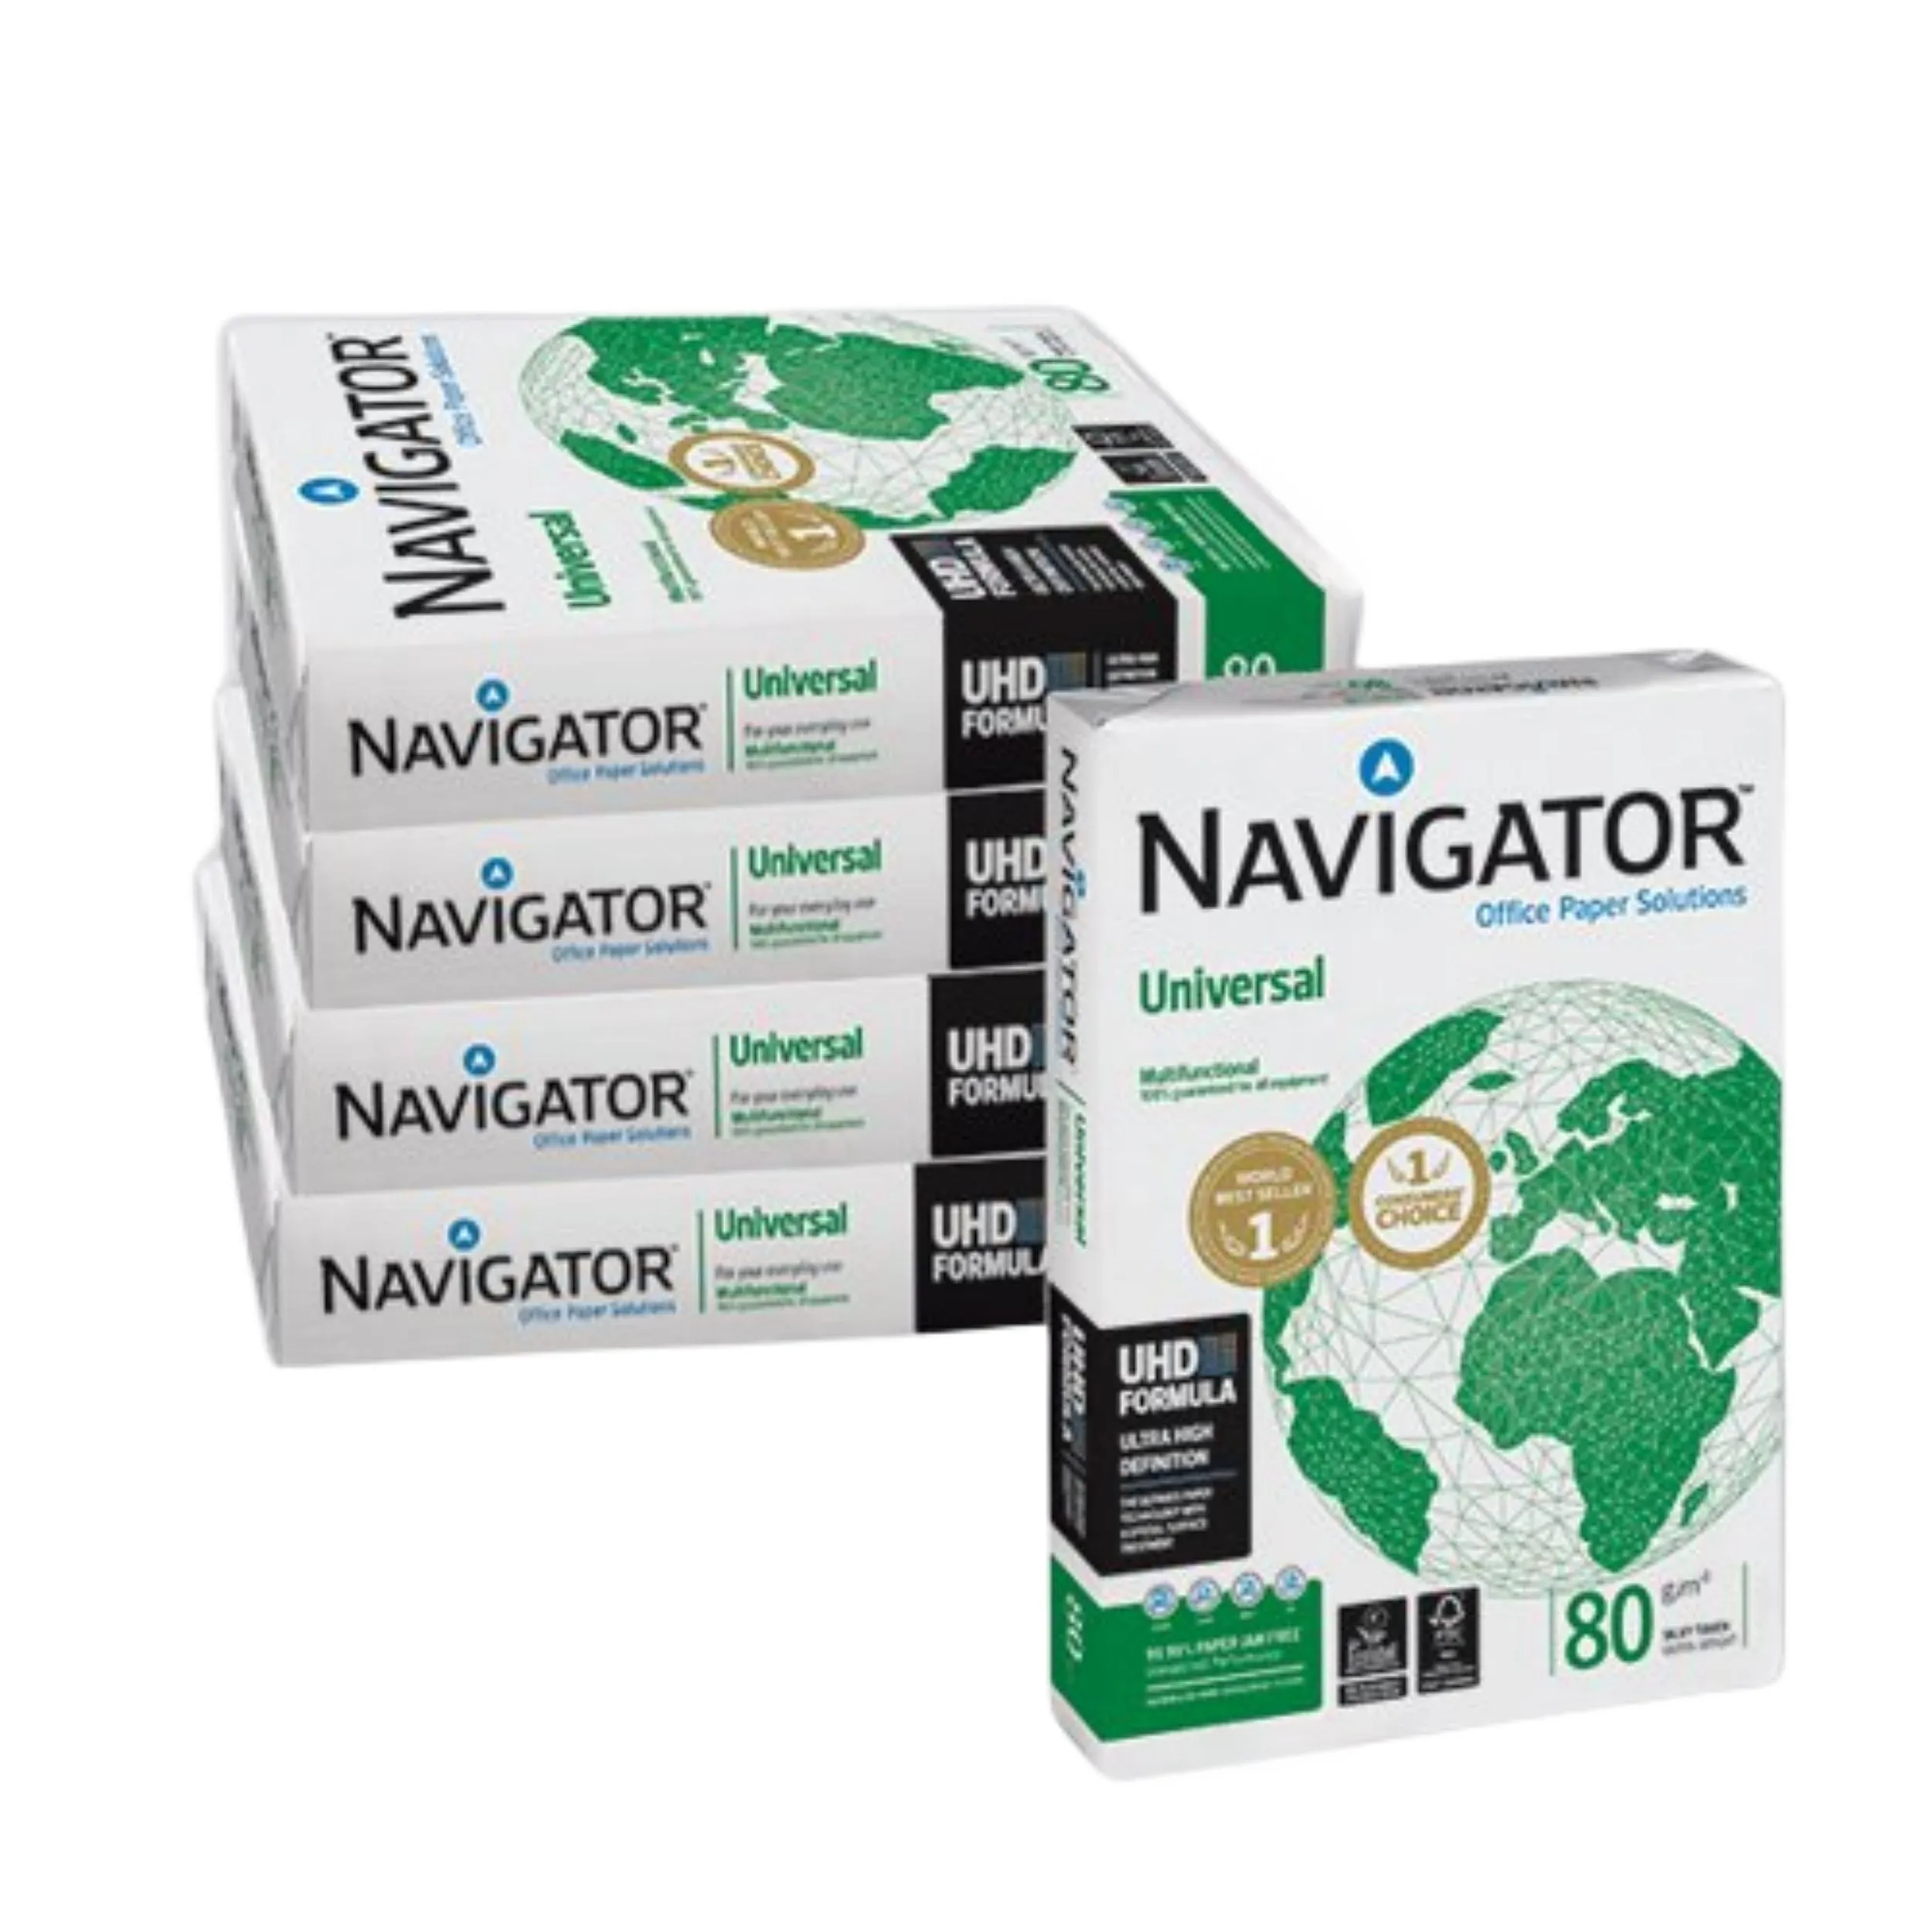 Großhandels preis Papier Ries Navigator A4 Papier 80 Gsm Box 5 Ries